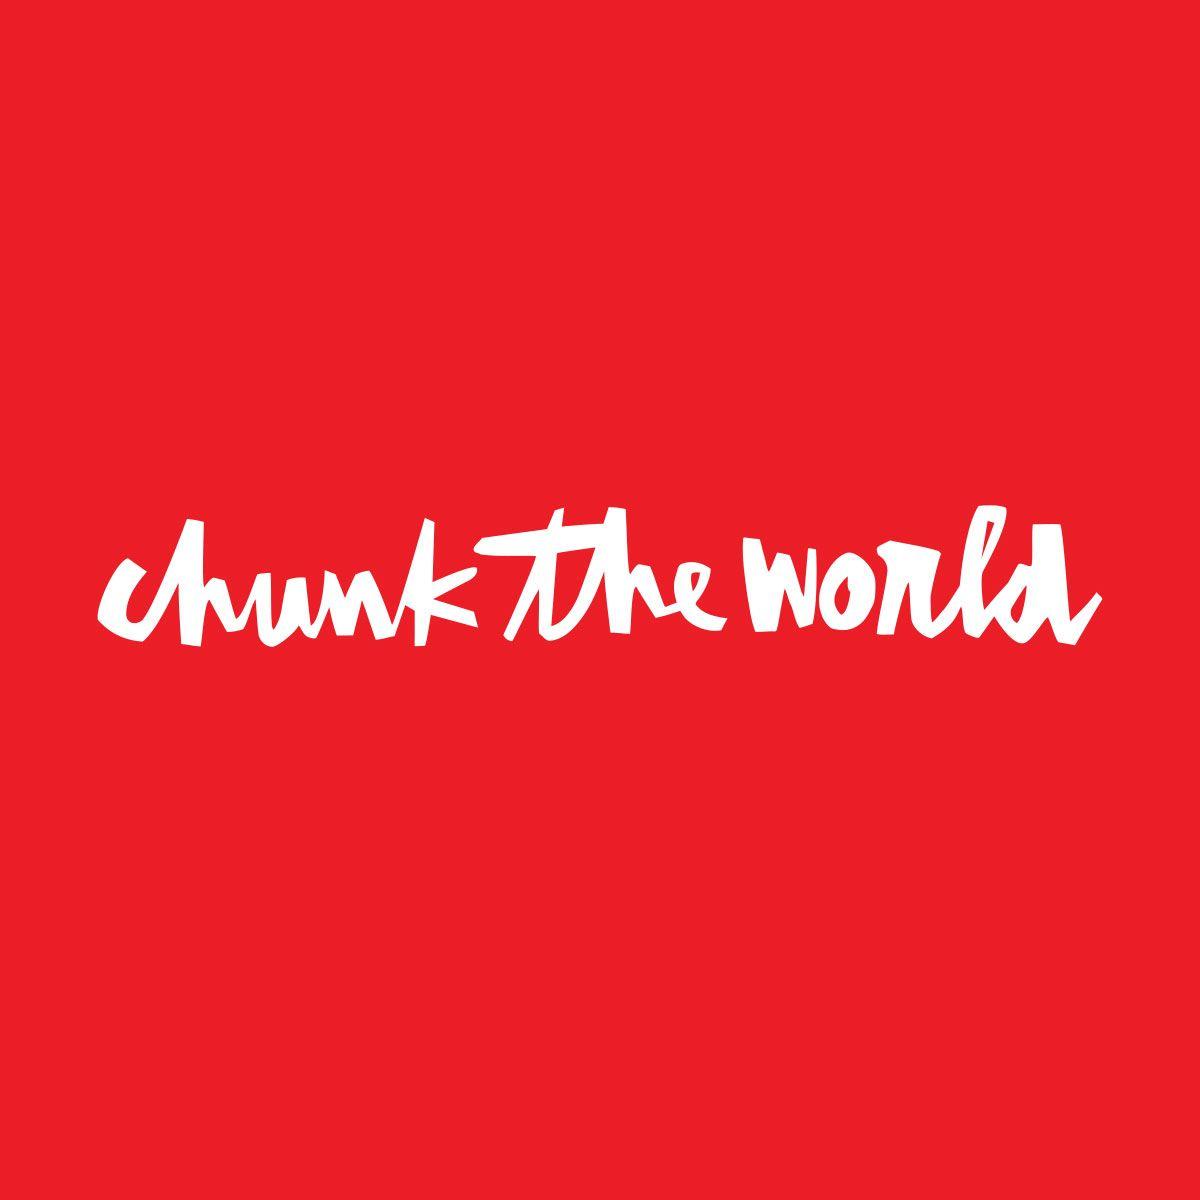 Chocolate Skateboards Logo - Chocolate Skateboards / Chunk The World